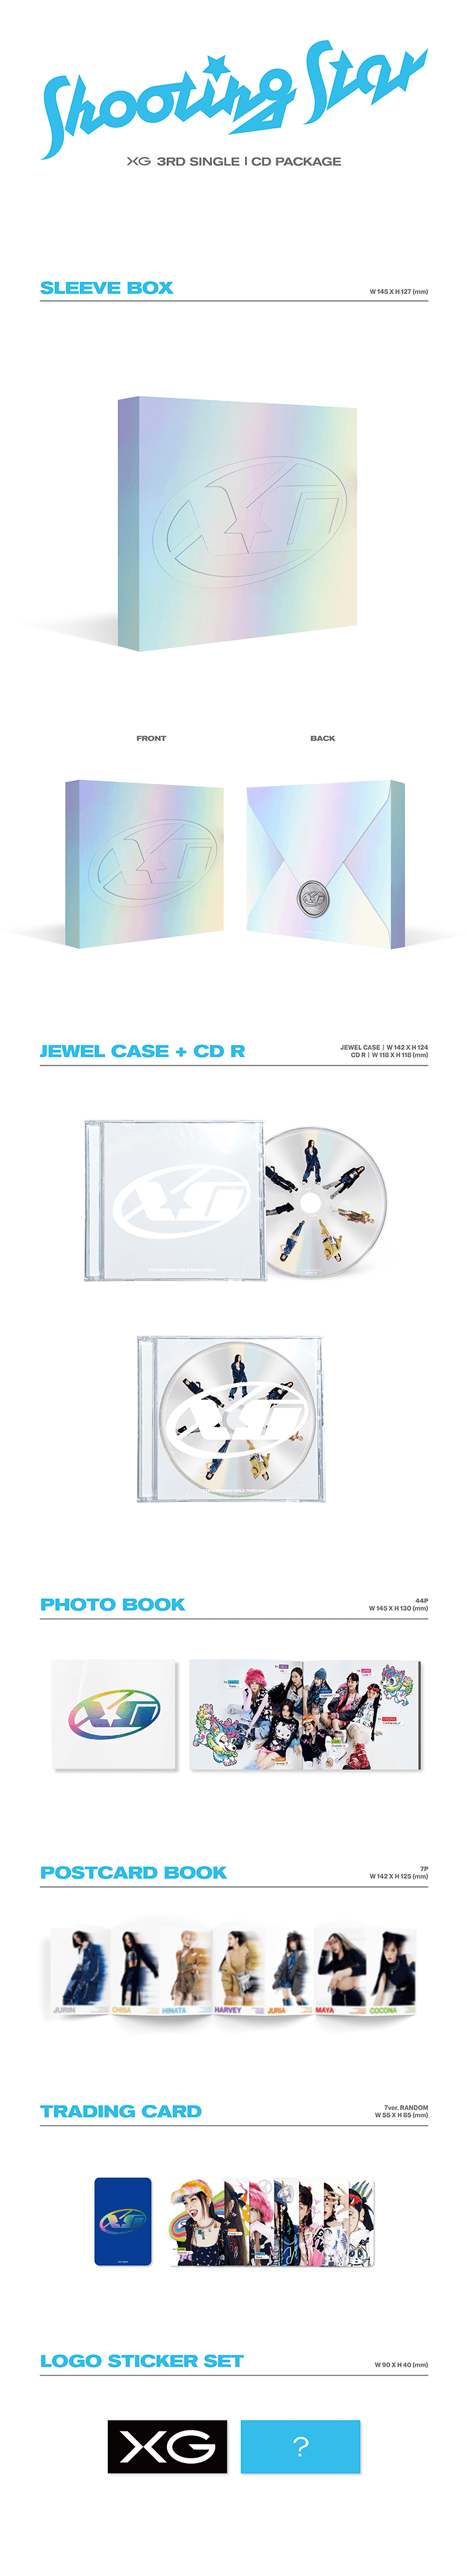 XG SHOOTING STAR CD BOX Album | UK FREE SHIPPING | Kpop Shop